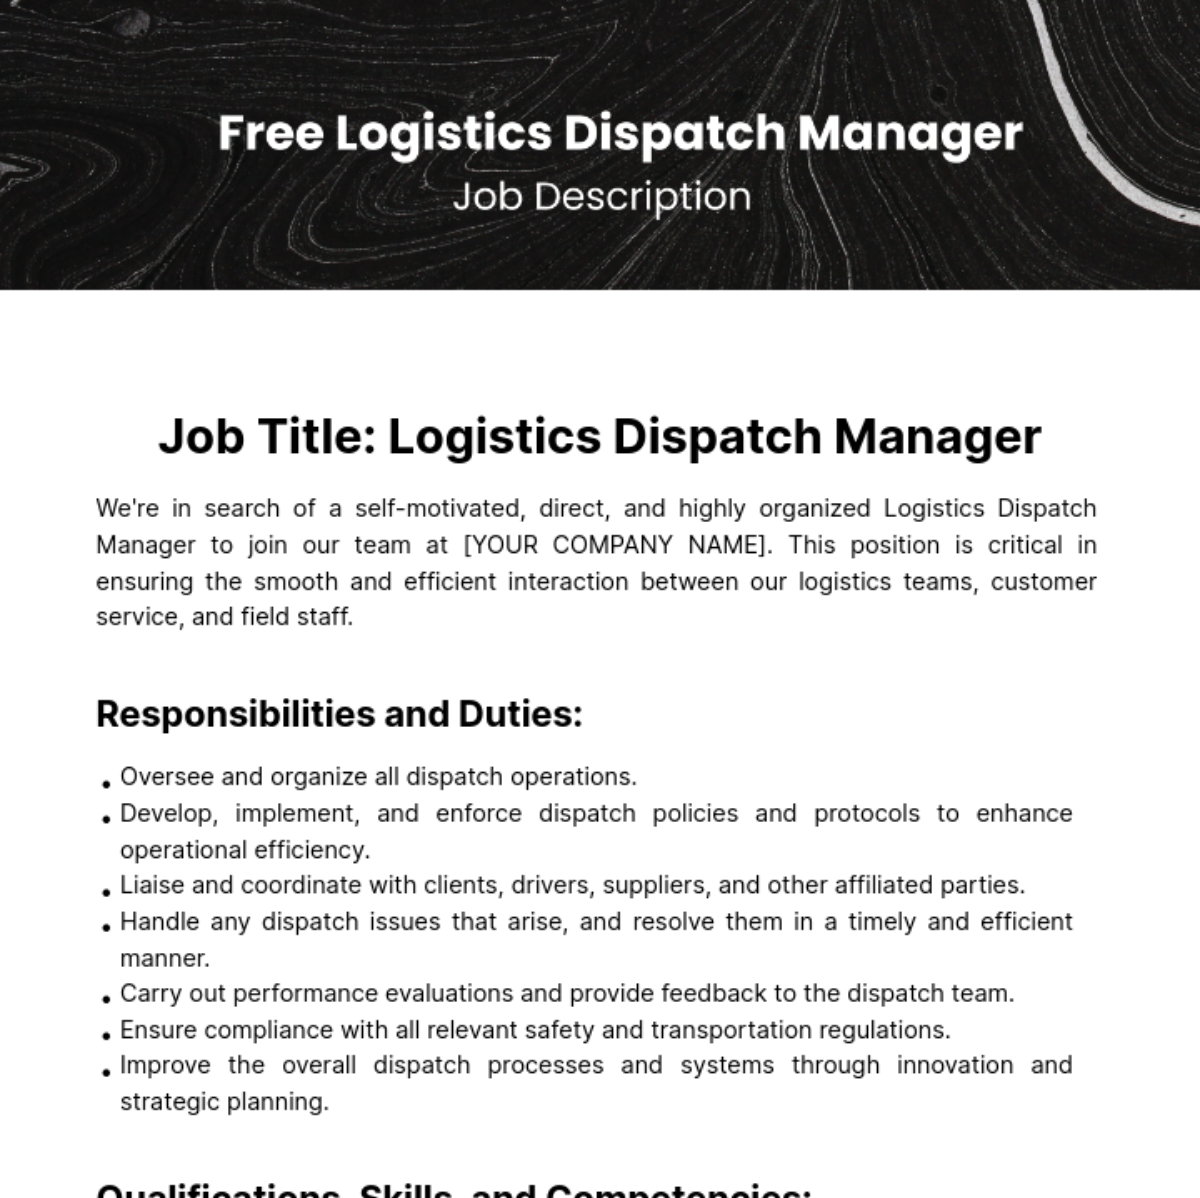 Free Logistics Dispatch Manager Job Description Template